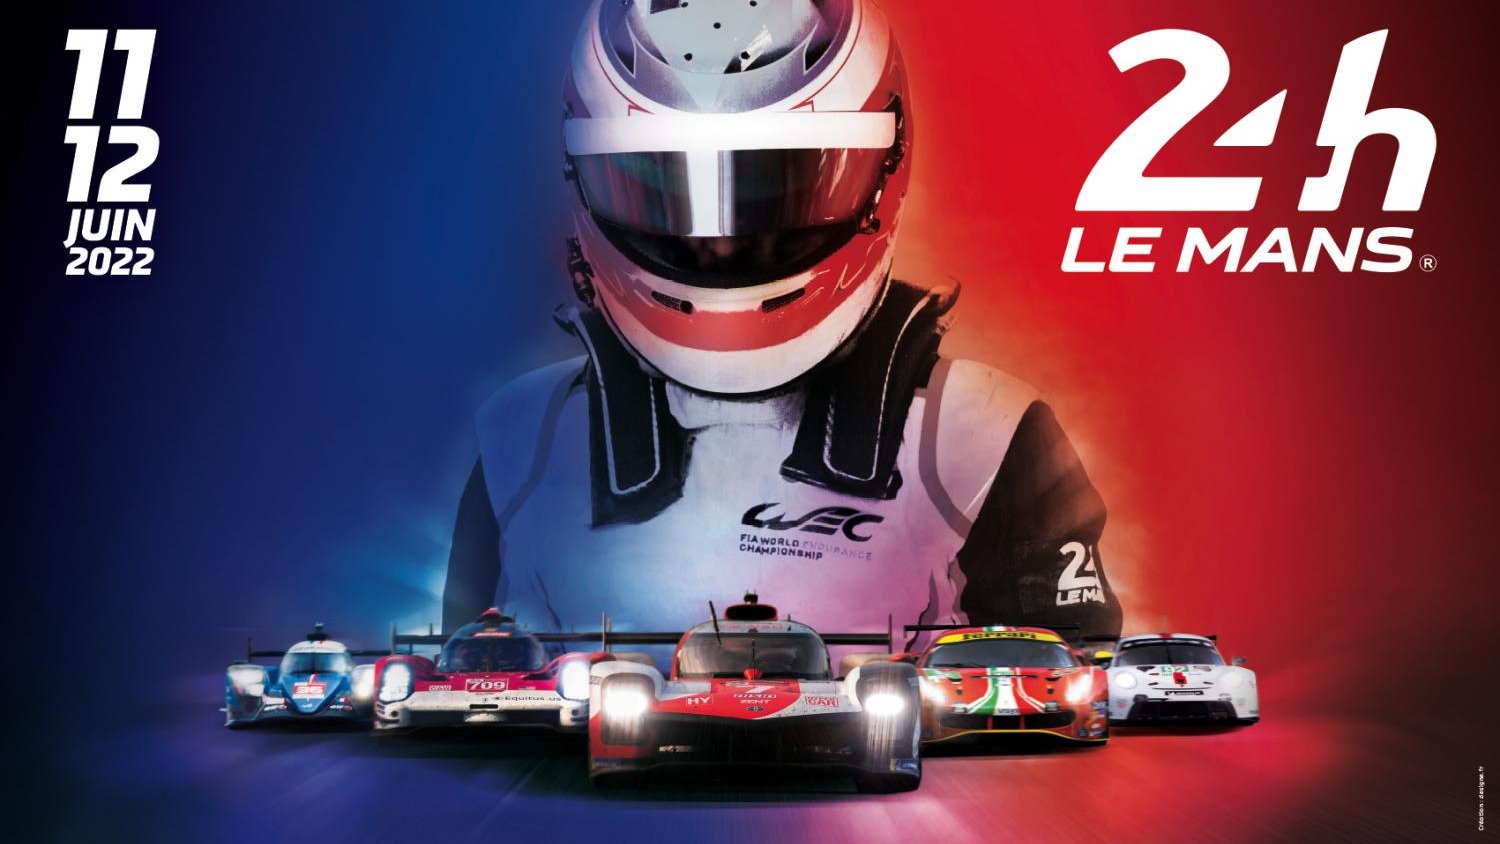 The Story So Far: 2022 FIA World Endurance Championship